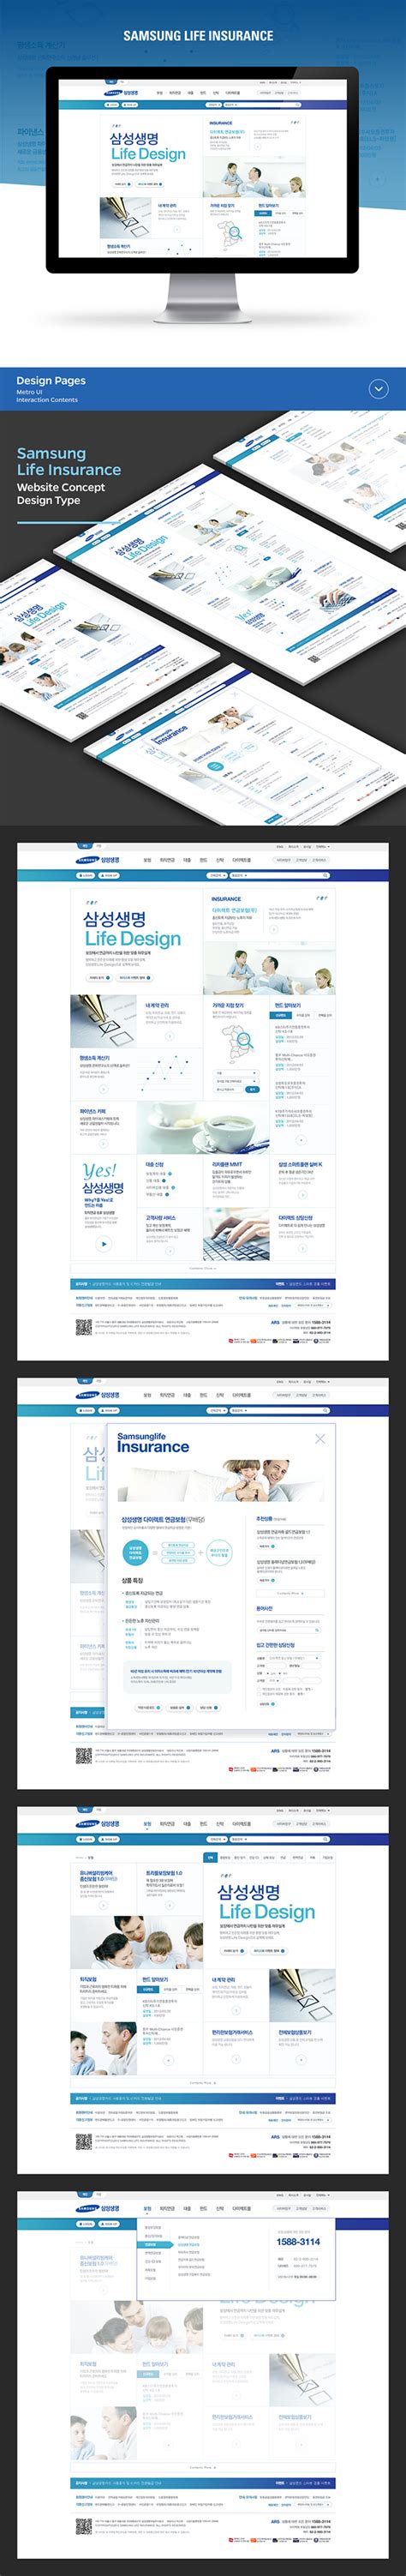 Samsung Life Insurance Website Concept Design On Pantone